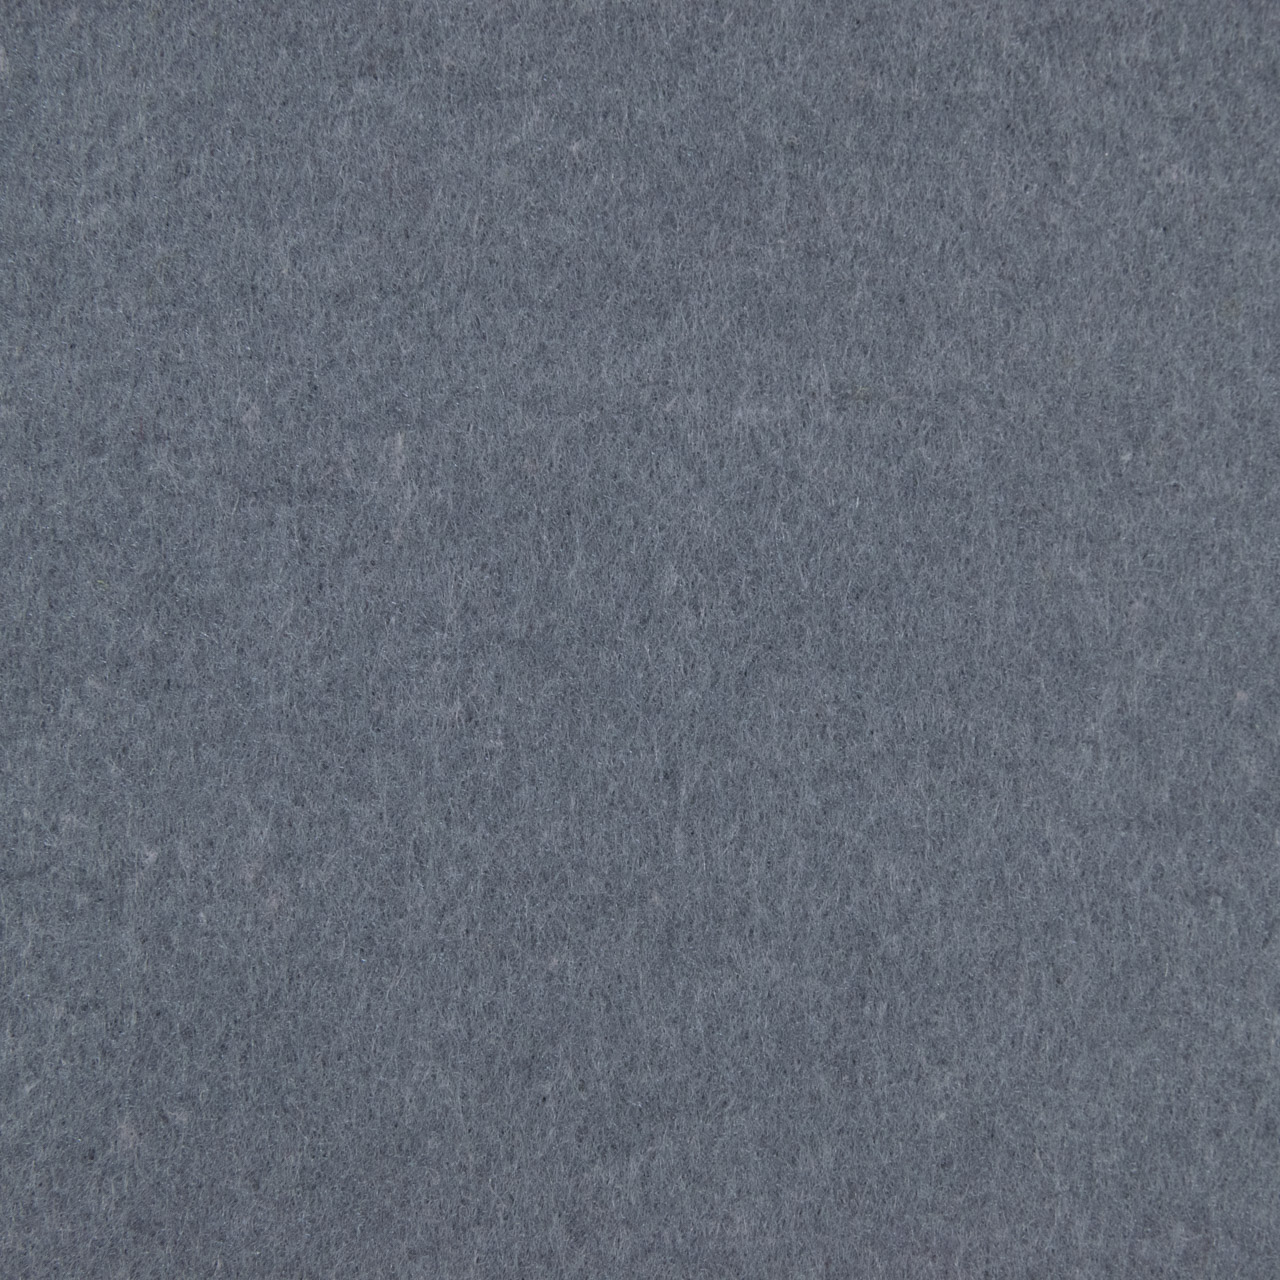 Stück schwarz schwarz 30x40cm Filzplatten 4mm dick Bastelfilz 